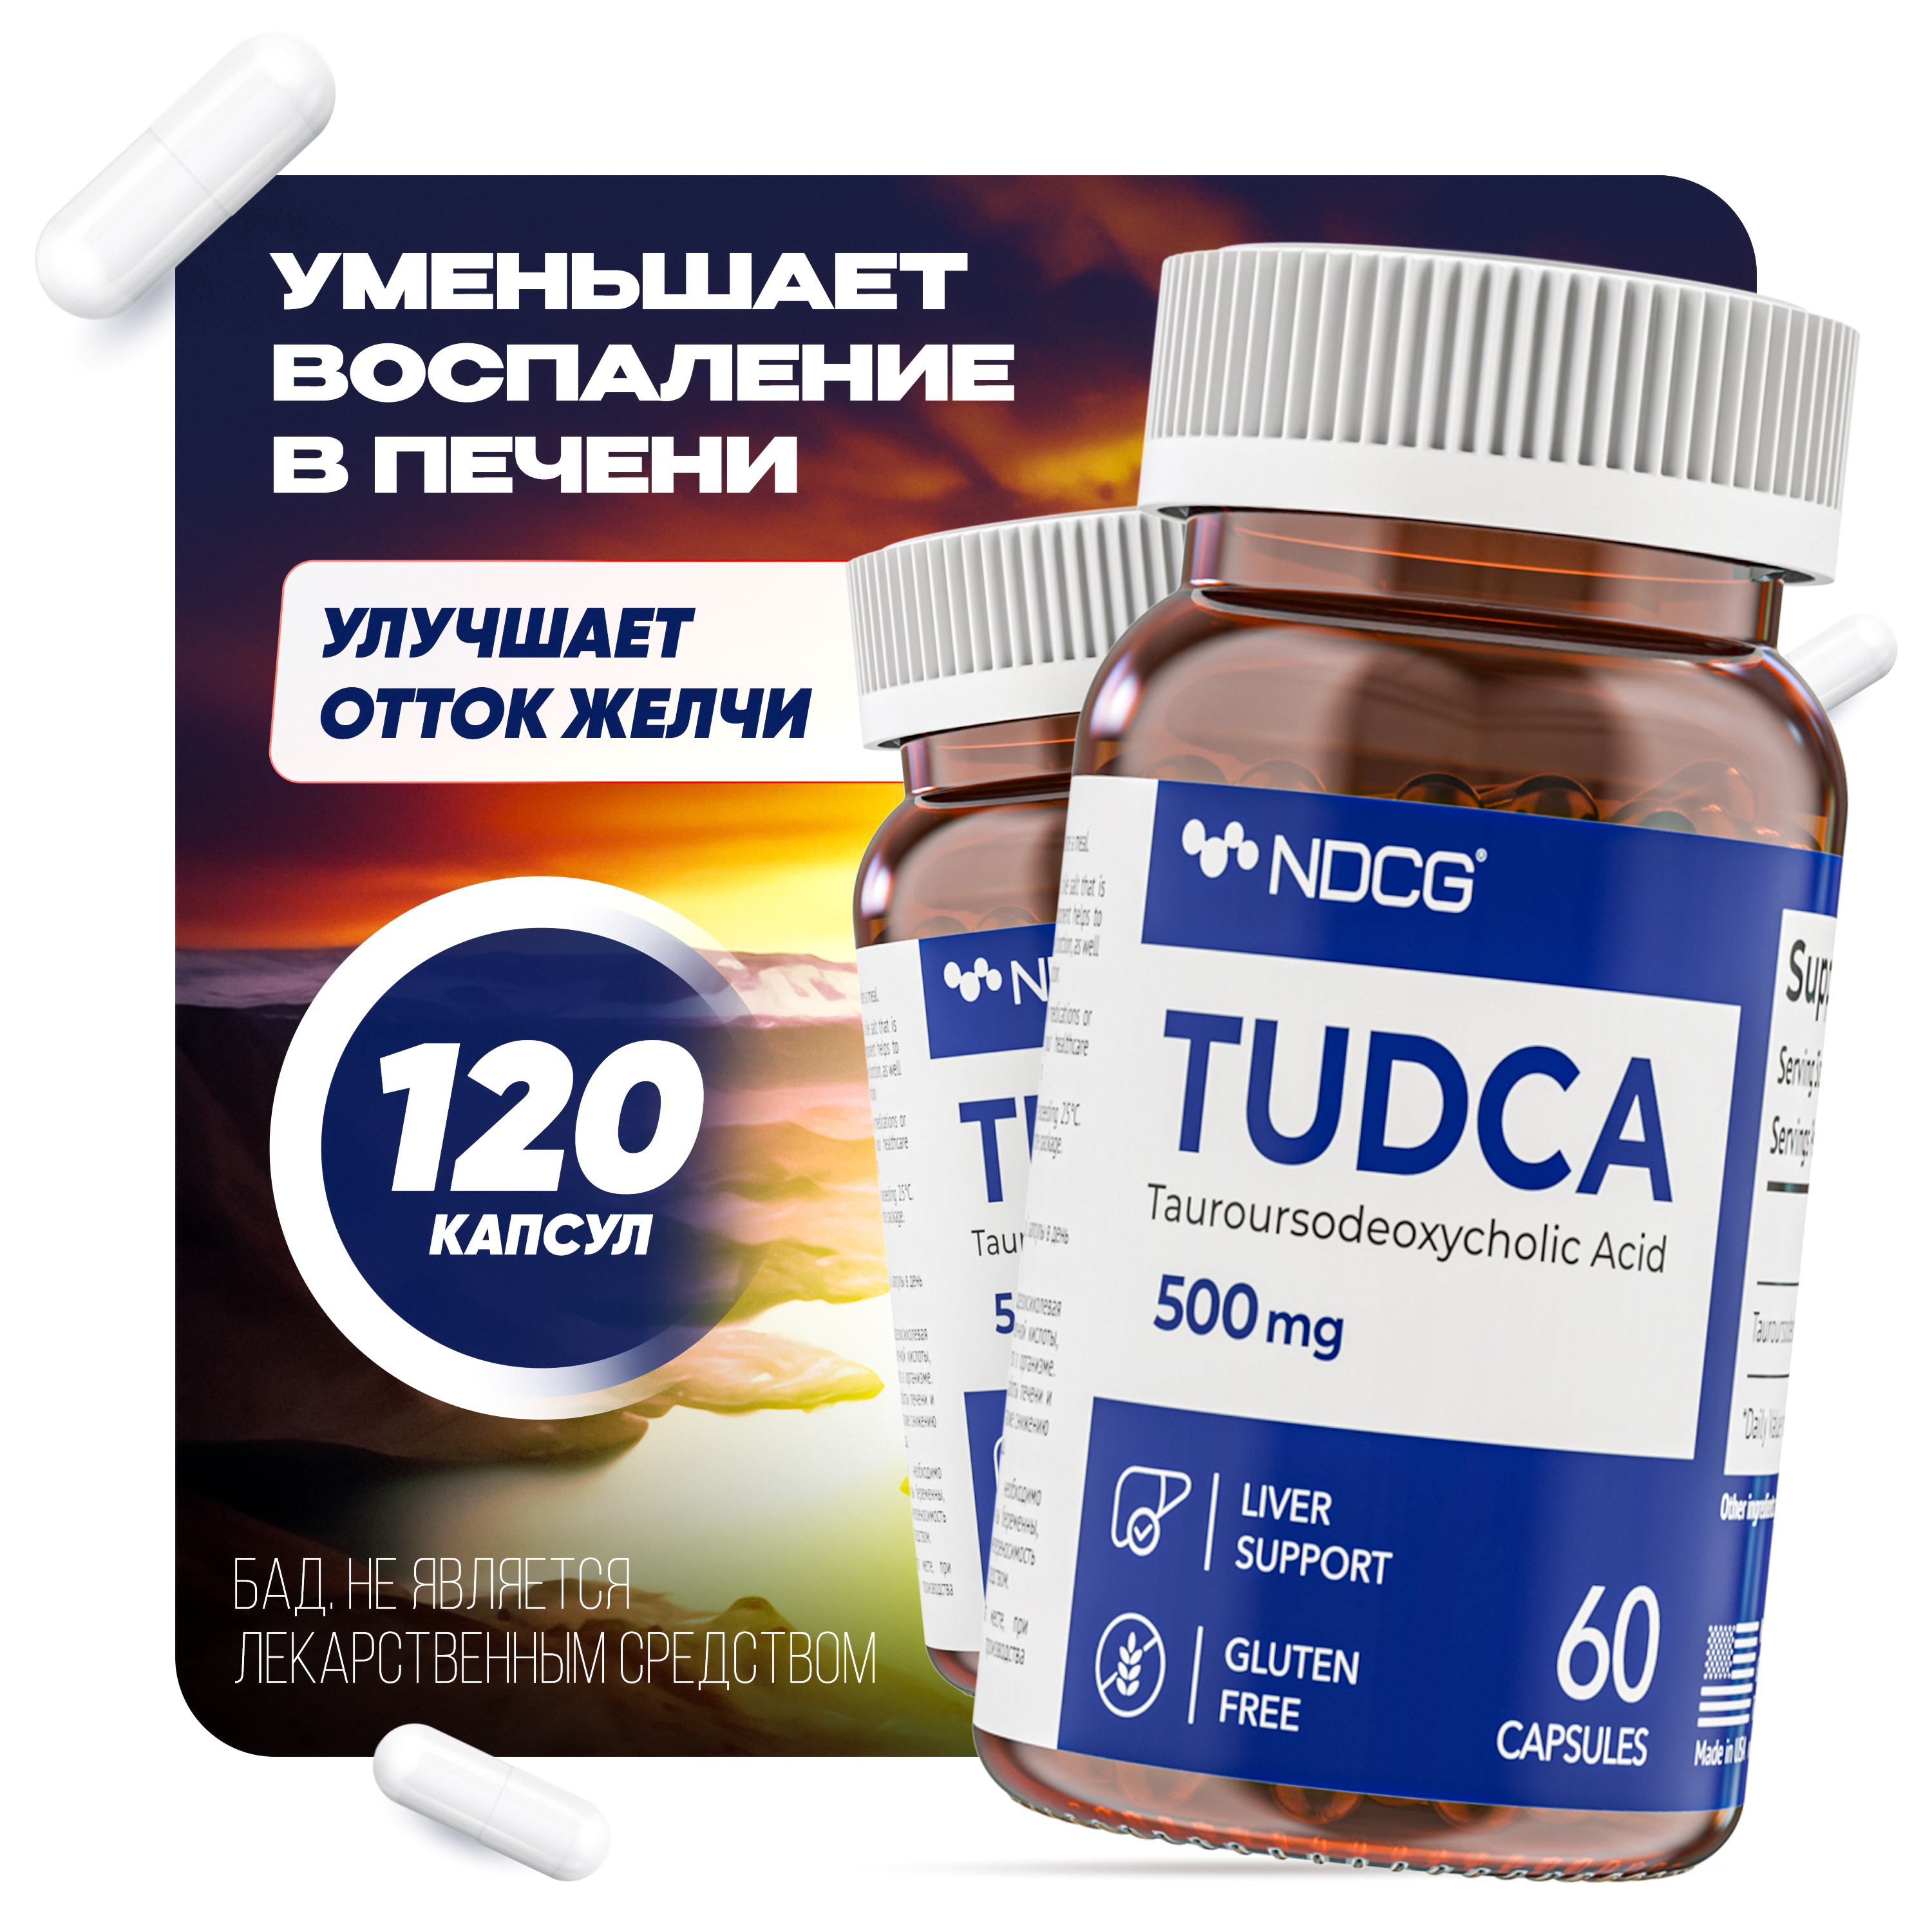 Комплект Тудка NDCG TUDCA 500 мг 60 капсул, 2 упаковки